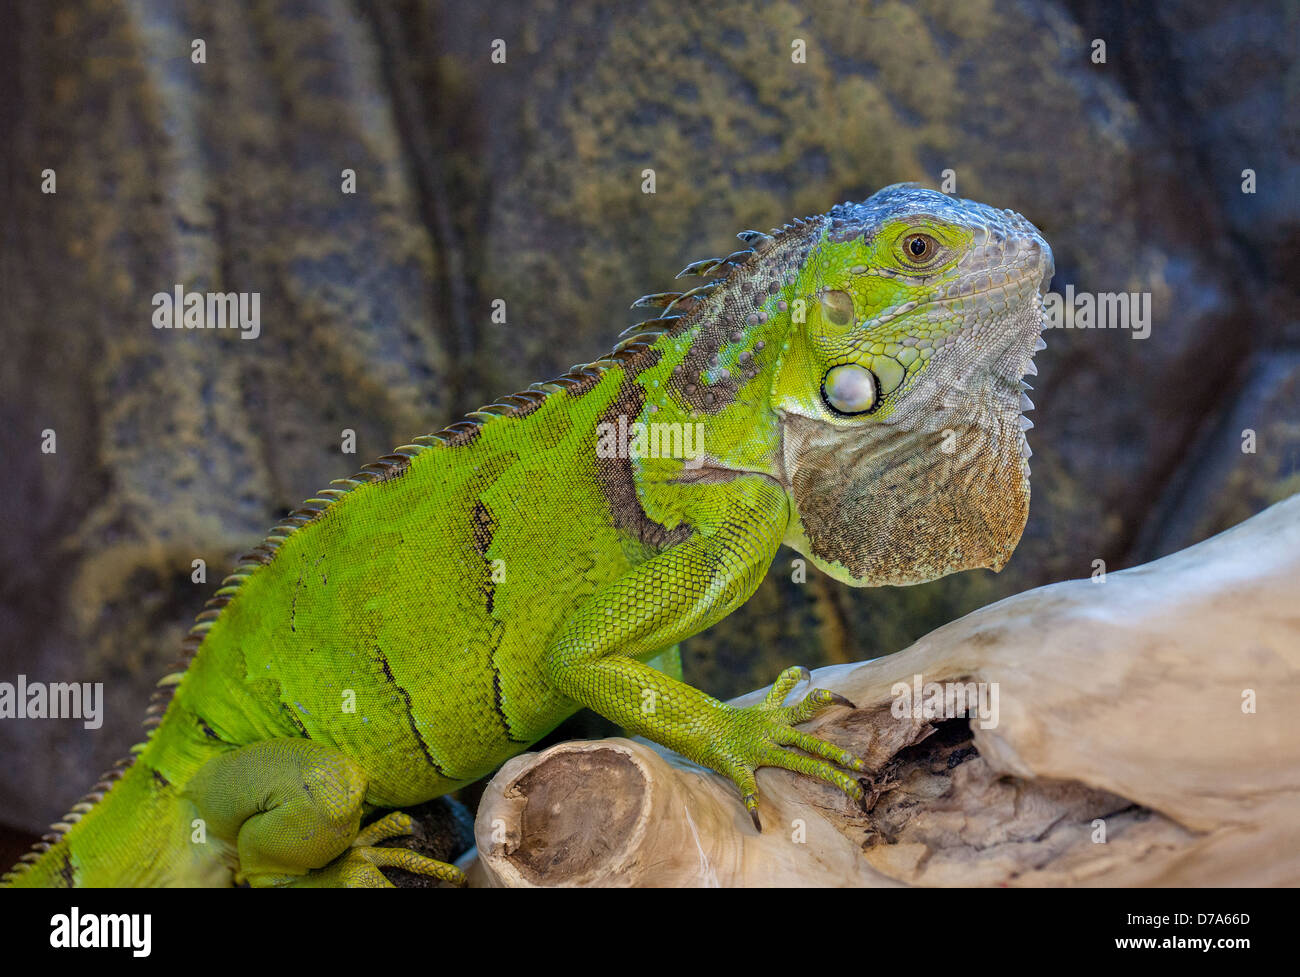 Iguana verde Foto de stock